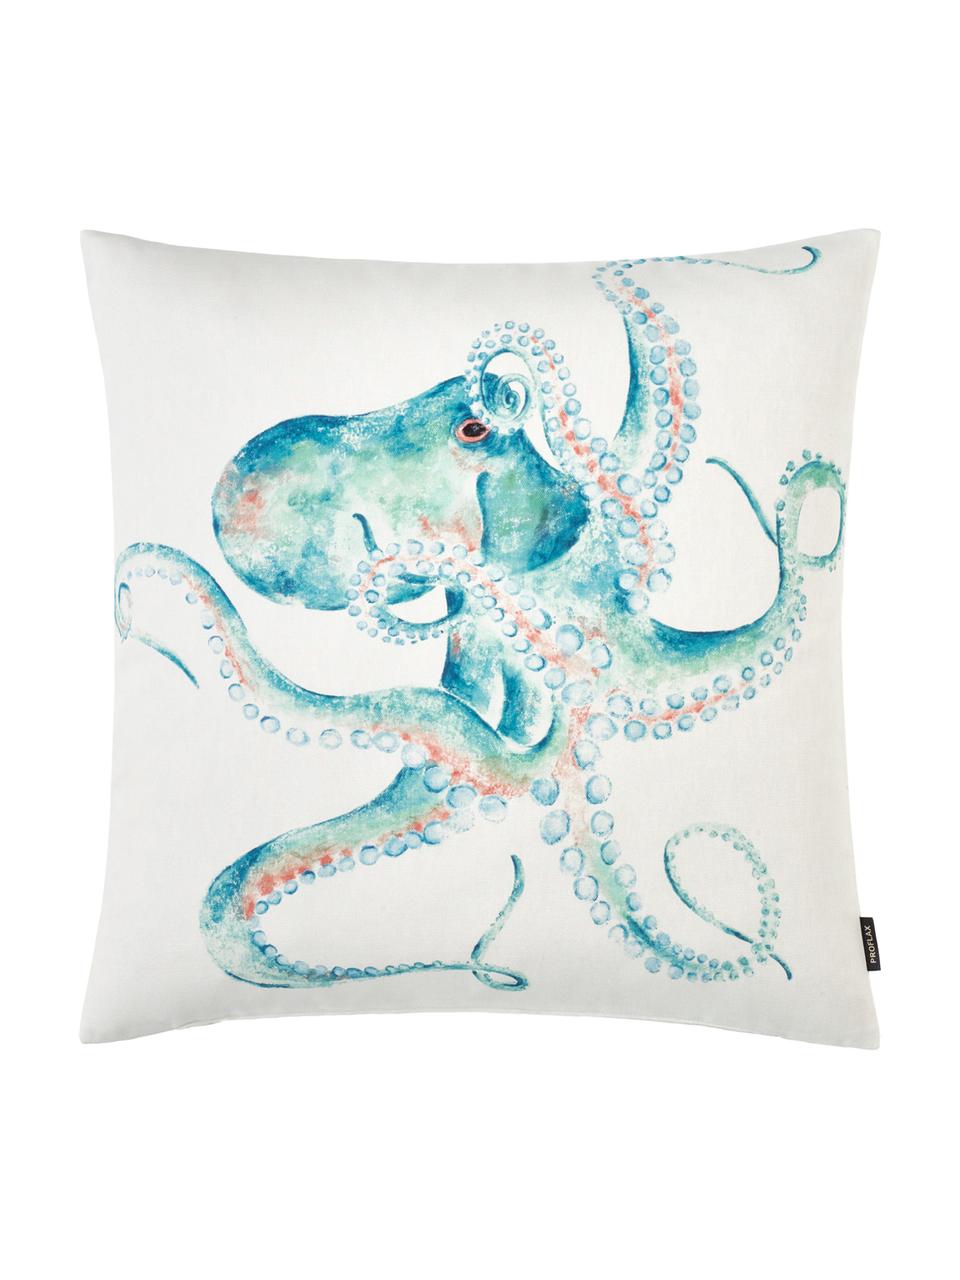 Kissenhülle Octopus, 100% Baumwolle, Weiß, Türkis, Rot, 50 x 50 cm